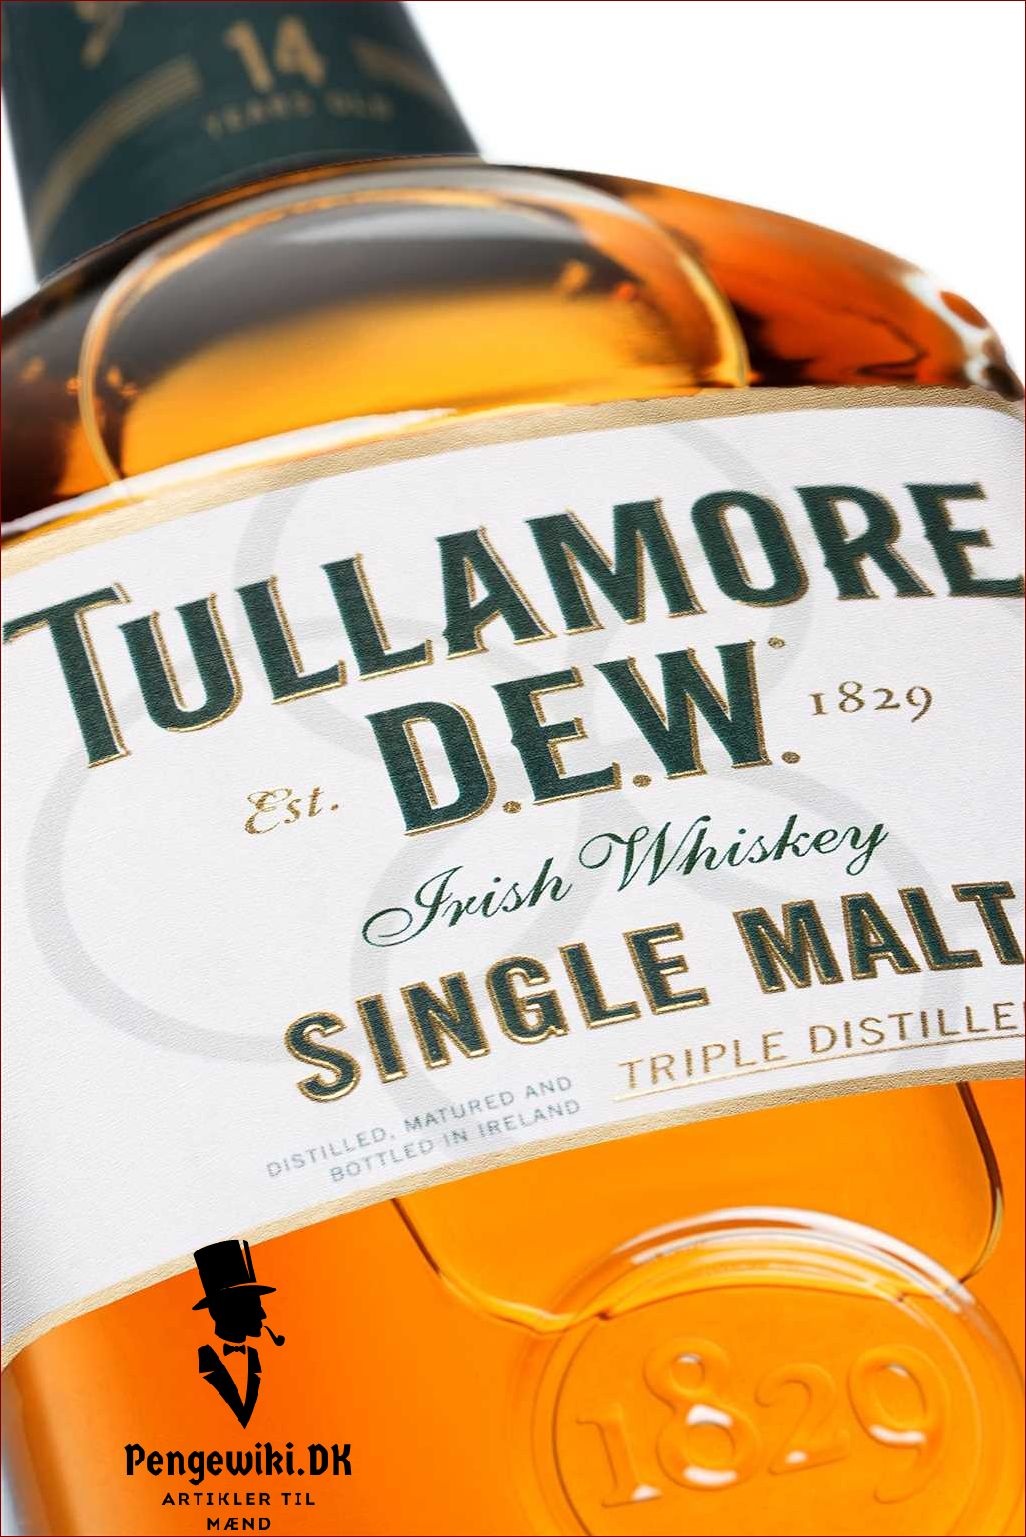 Tullamore Dew - Oplev den autentiske irske whiskey